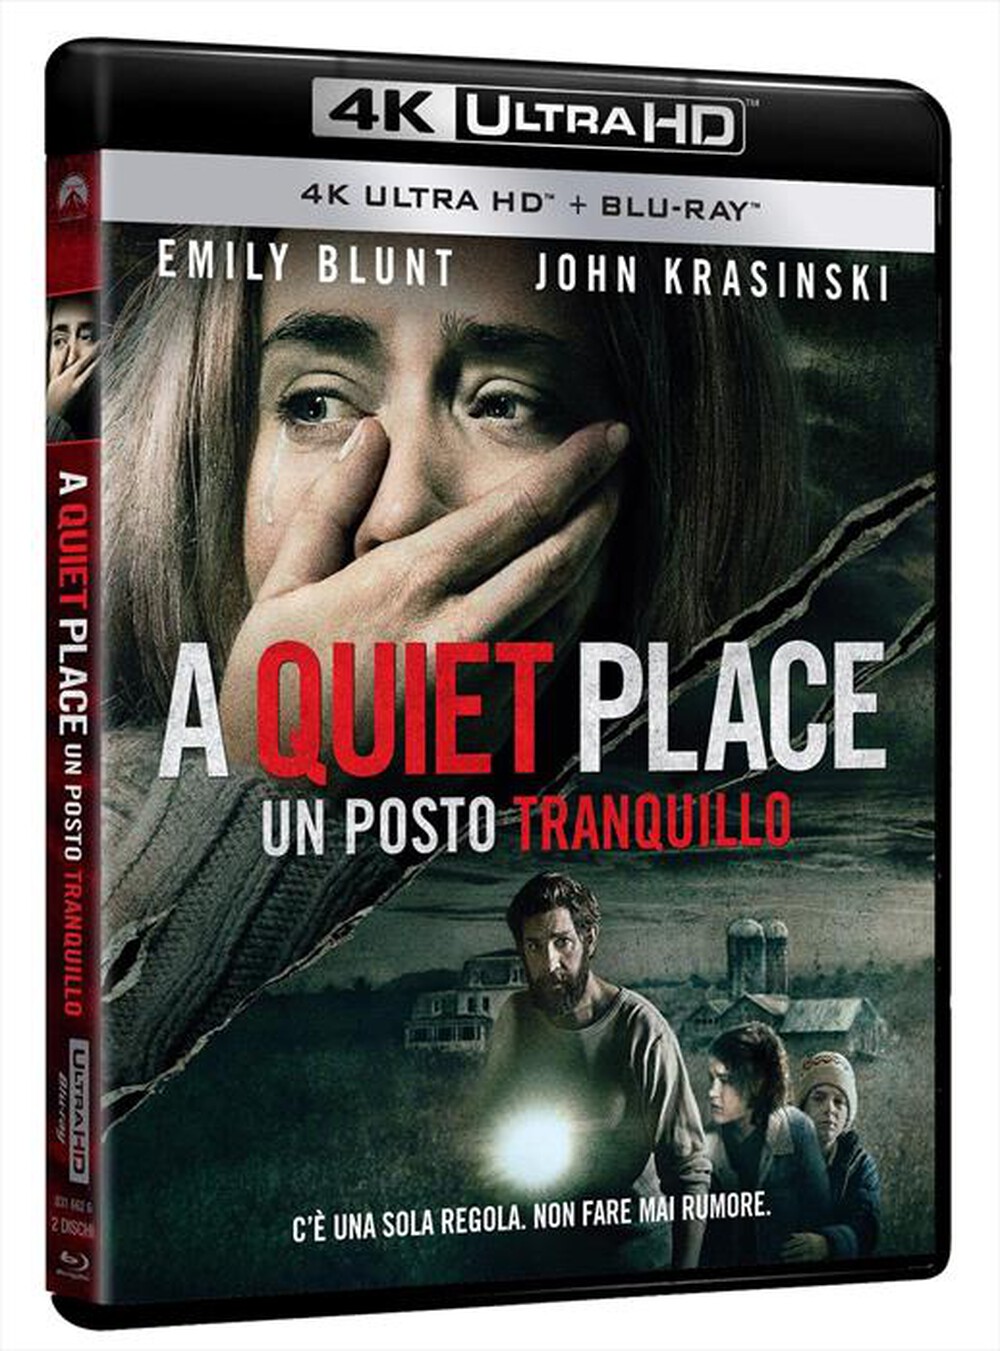 "PARAMOUNT PICTURE - Quiet Place (A) - Un Posto Tranquillo (4K Ultra"